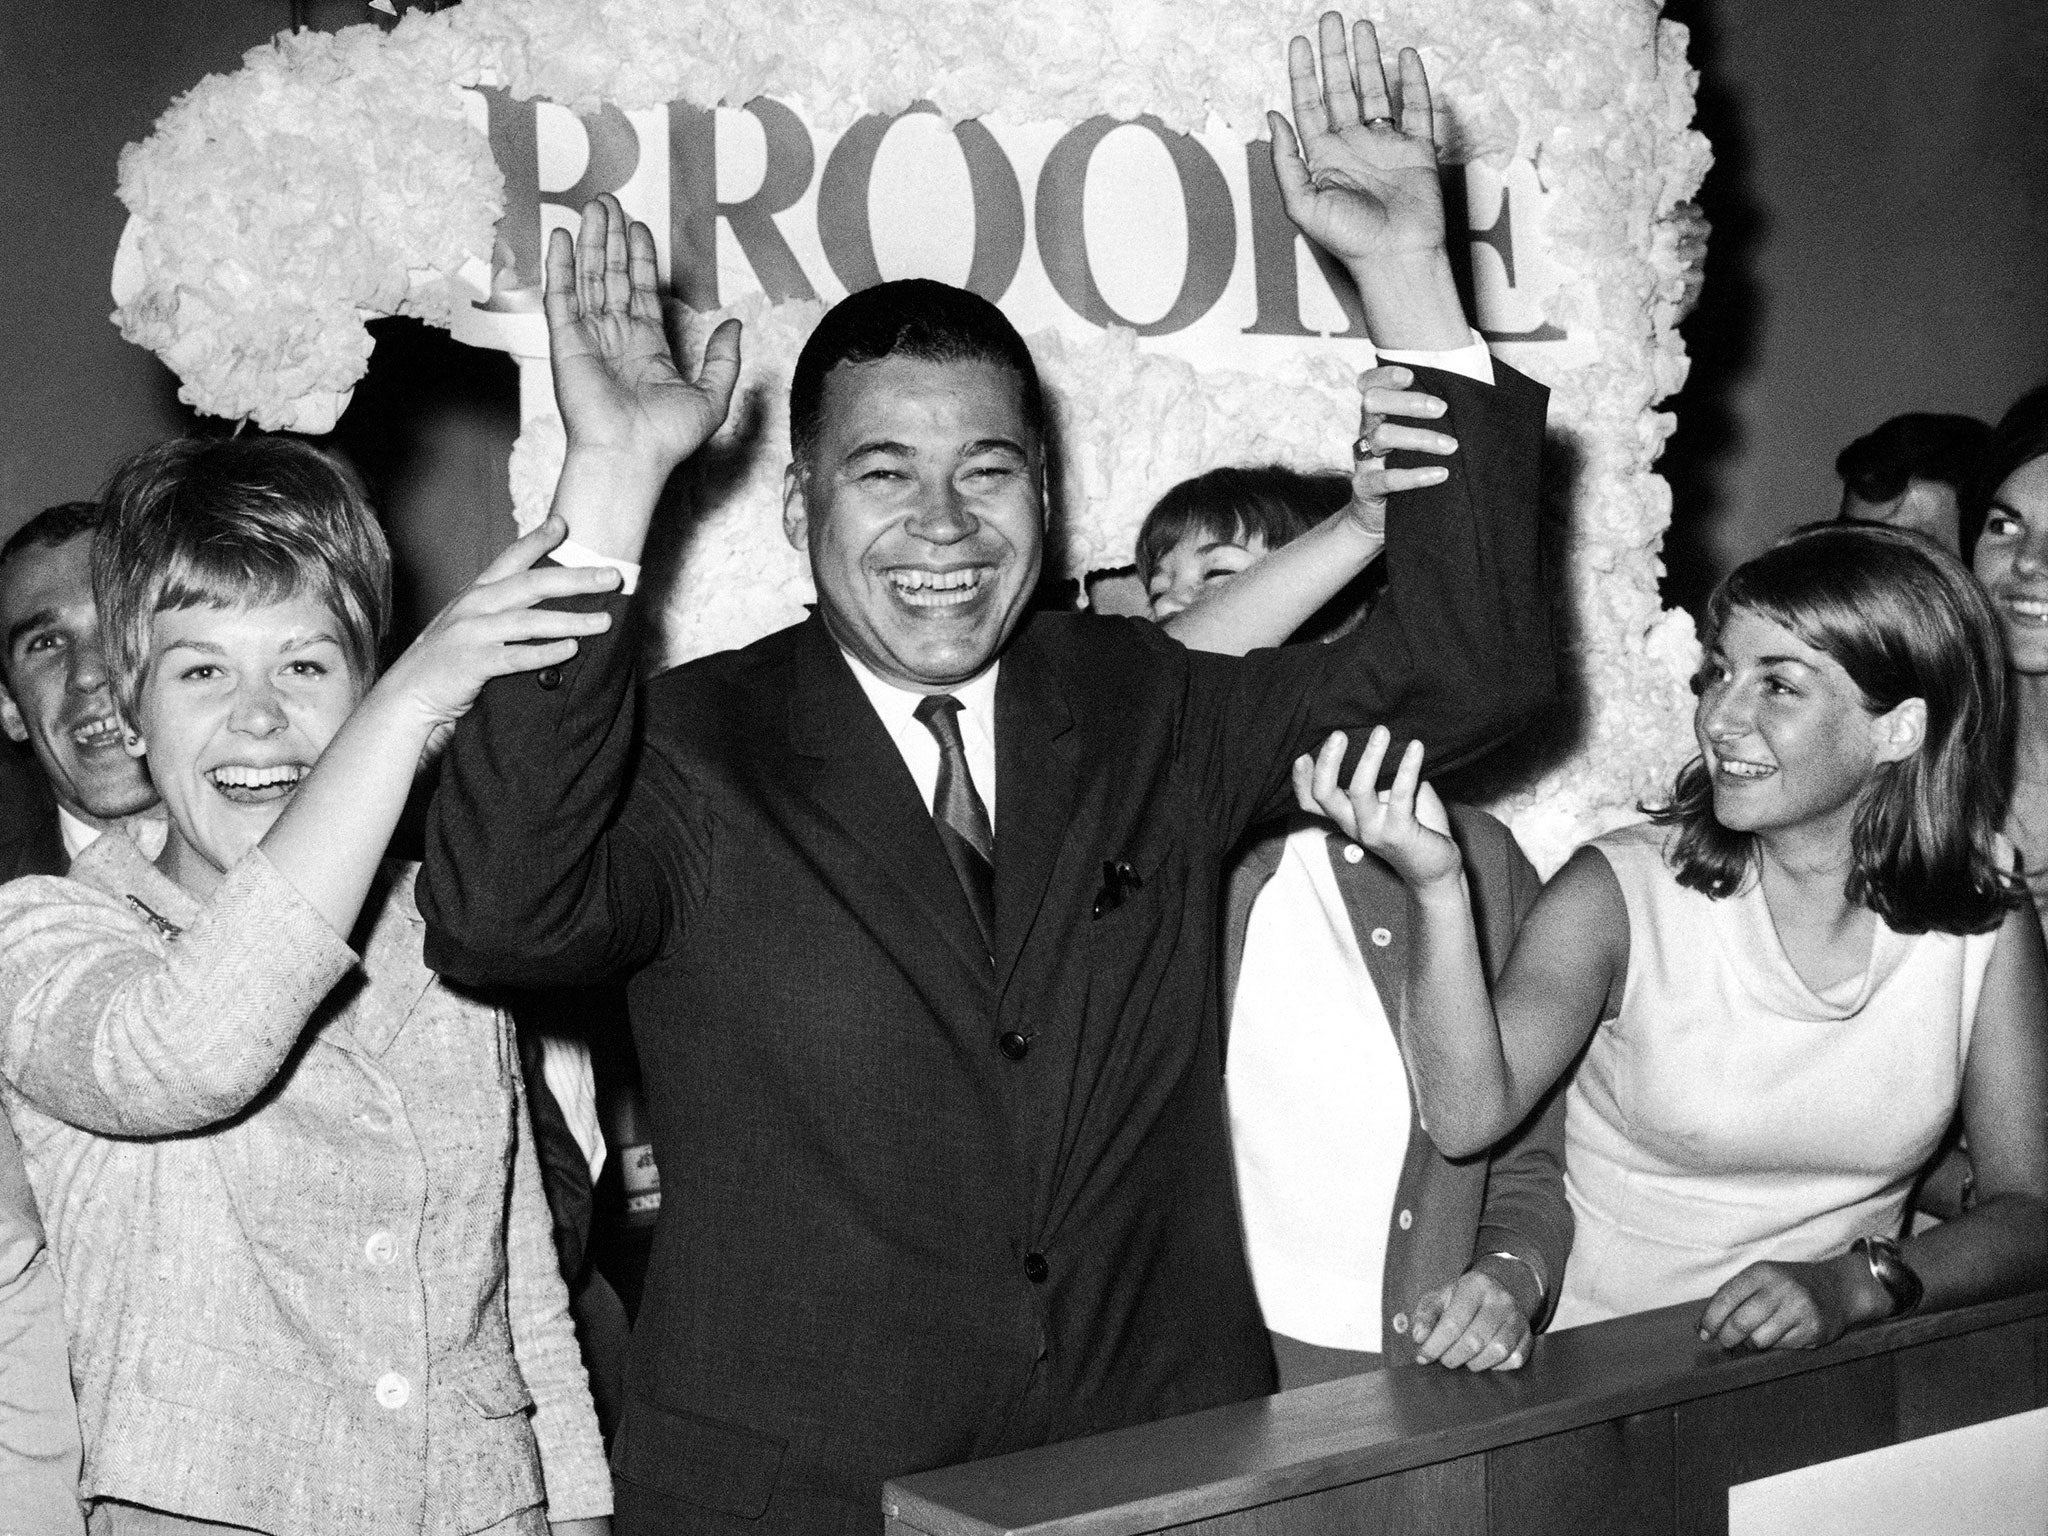 Edward Brooke celebrating after winning the nomination for the Senate in 1966